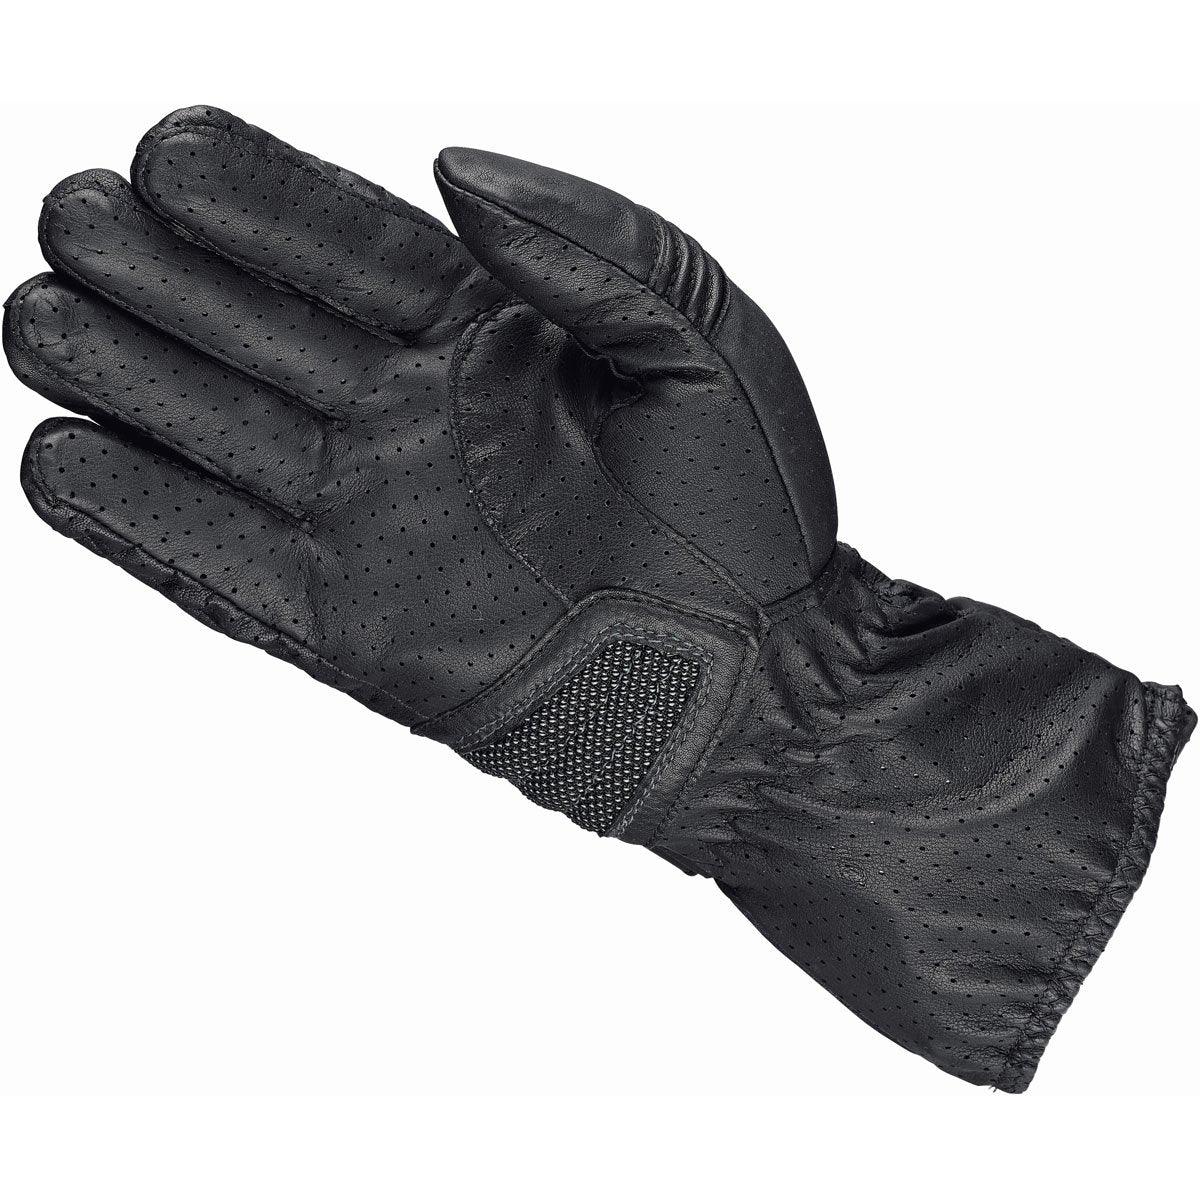 Held 2616 Tour Guide Gloves Black - Summer Motorcycle Gloves